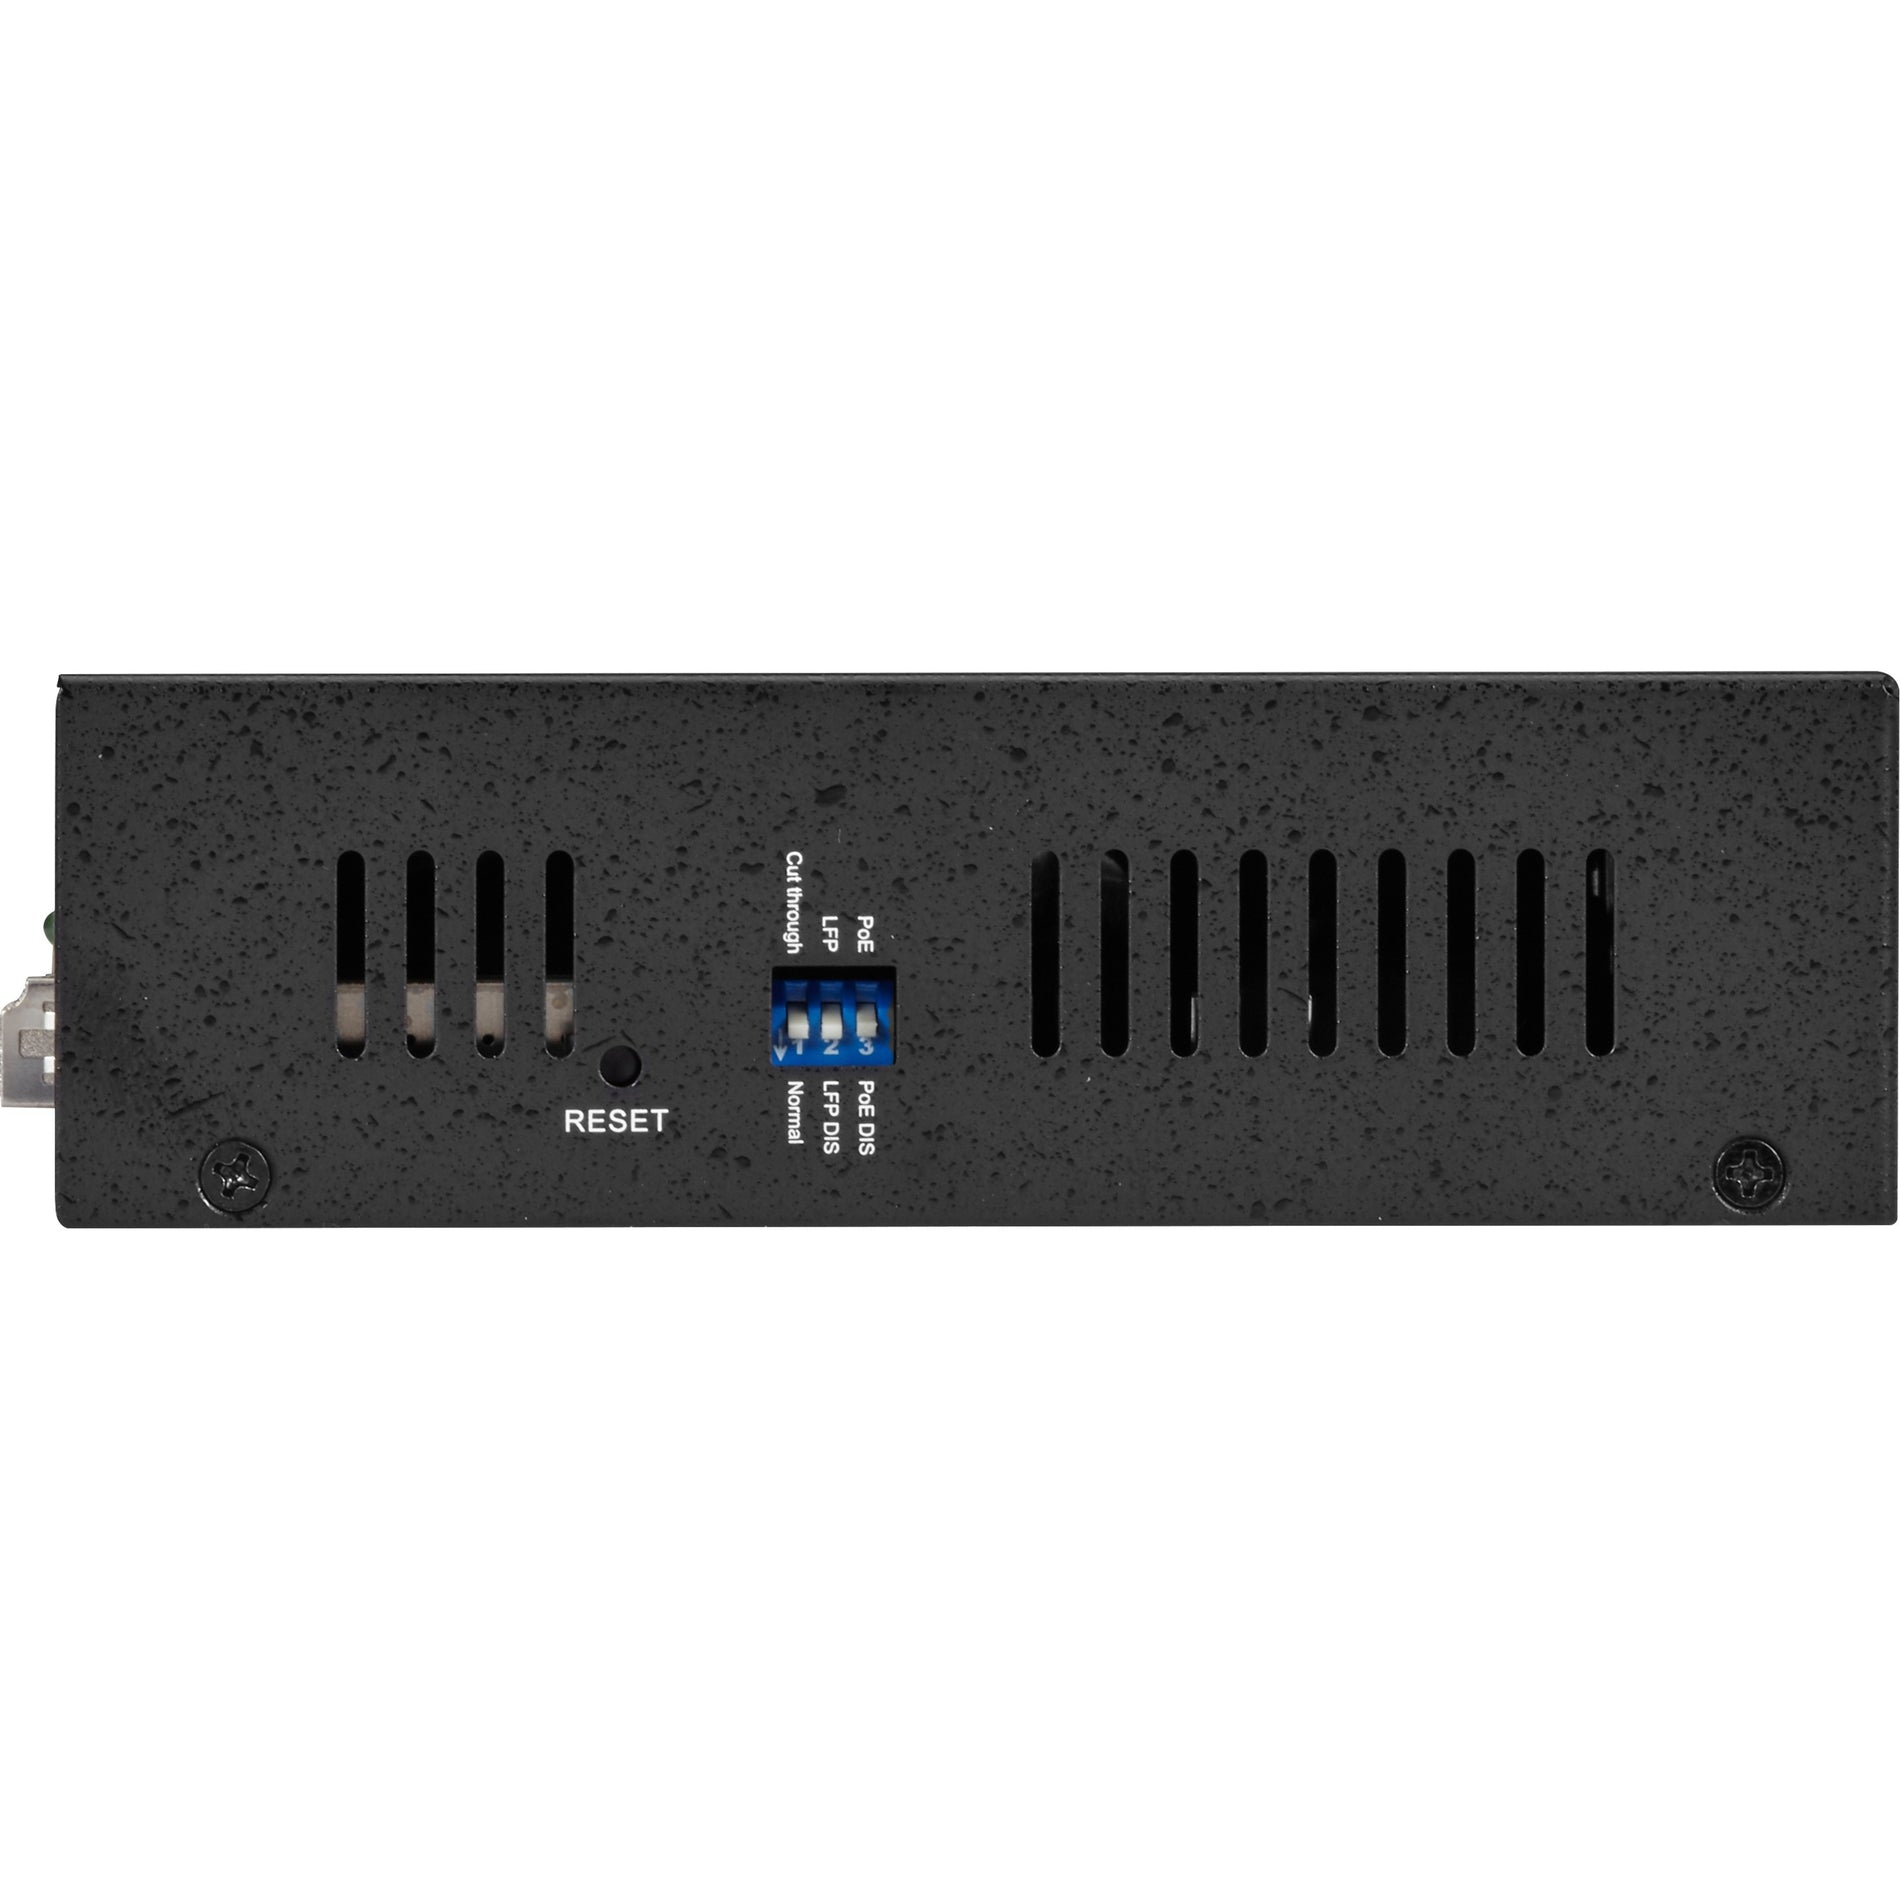 Schwarze Box LPS500A-MM-LC-R3 10/100/1000B-T PoE PSE zu 1000B-X Medienkonverter Multimode-Faser Gigabit Ethernet